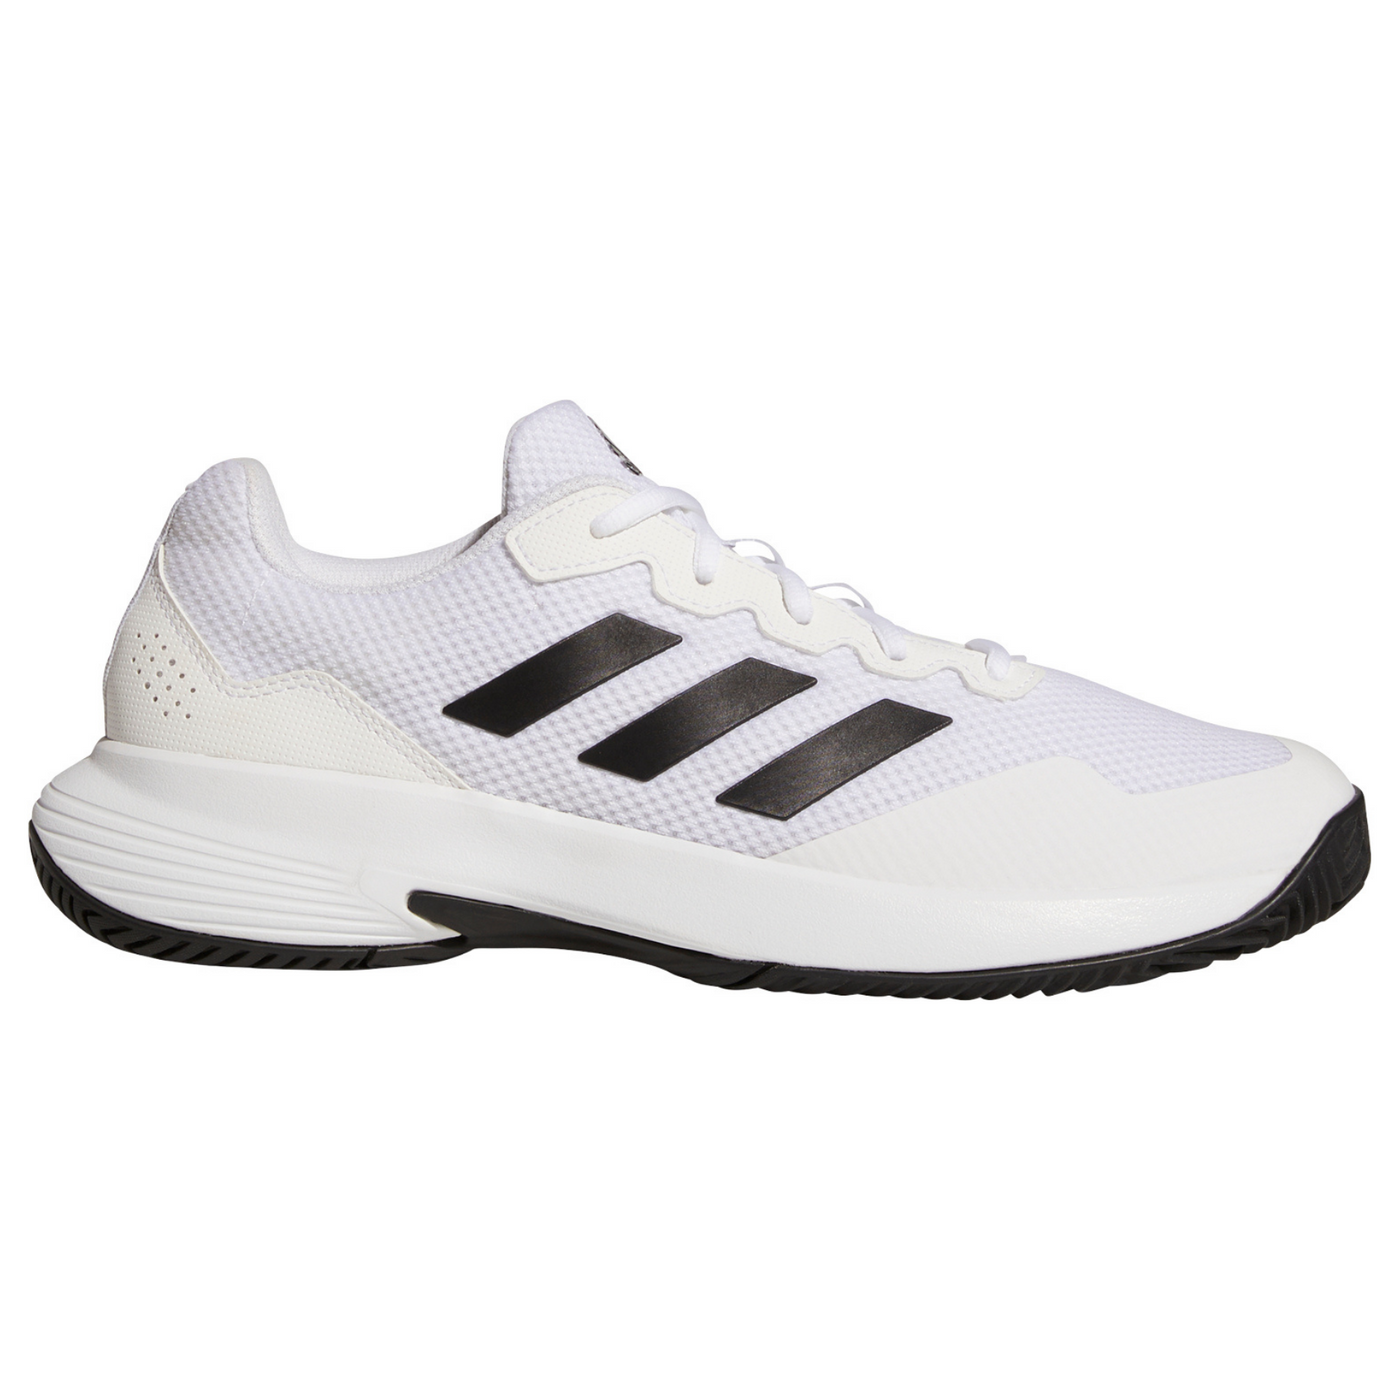 Adidas Game Court 2 Men Tennis Shoes - Cloud White/Core Black/Cloud White